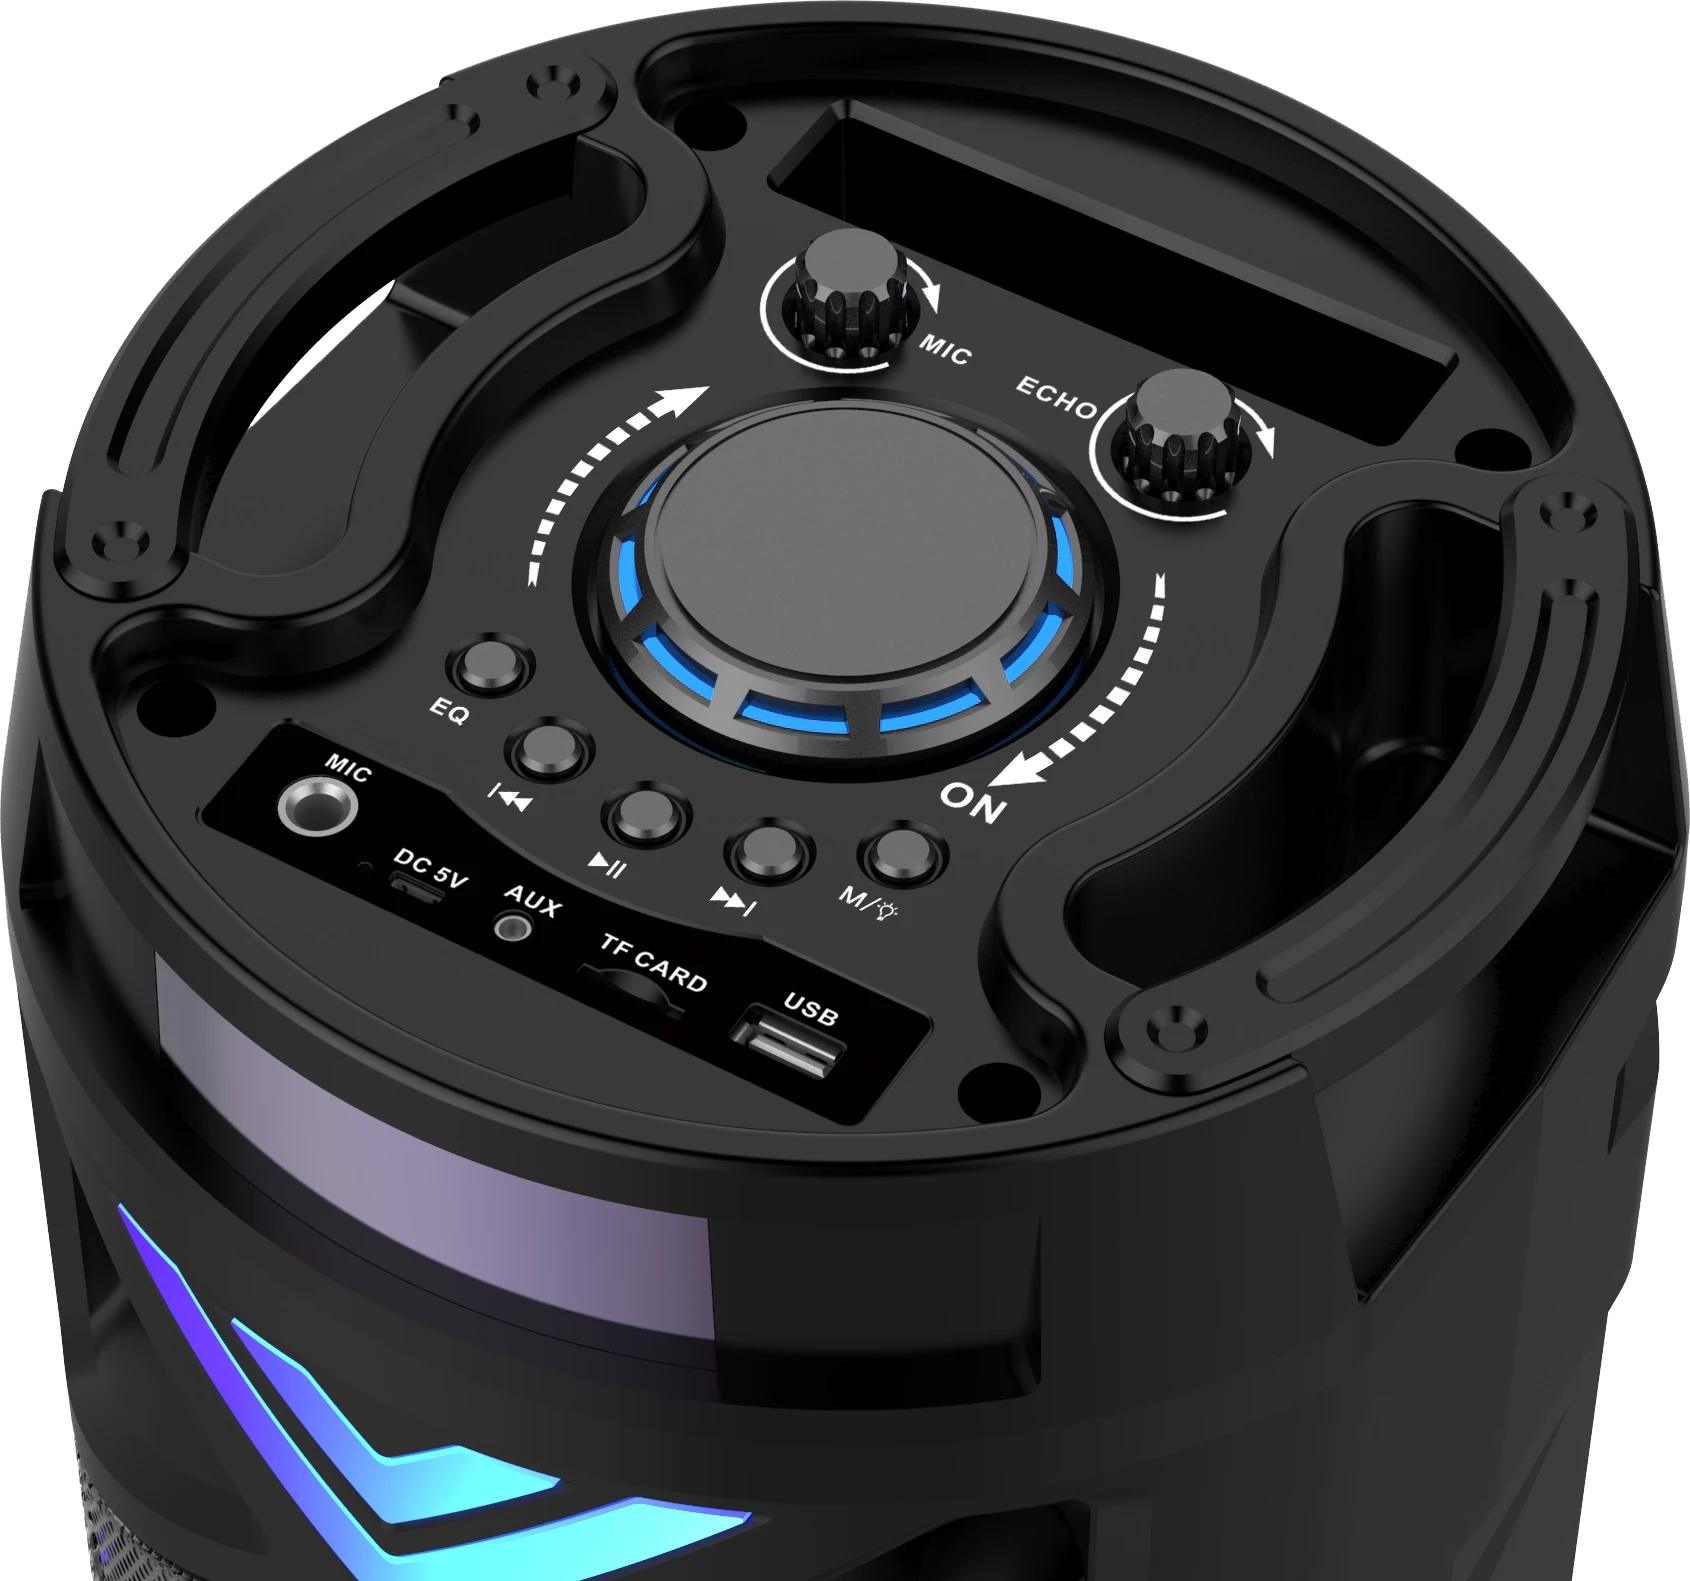 cmik mk-8812 audio subwoofer karaoke wireless portable remote control blue tooth microphone altavoz parlantes bocinas speaker